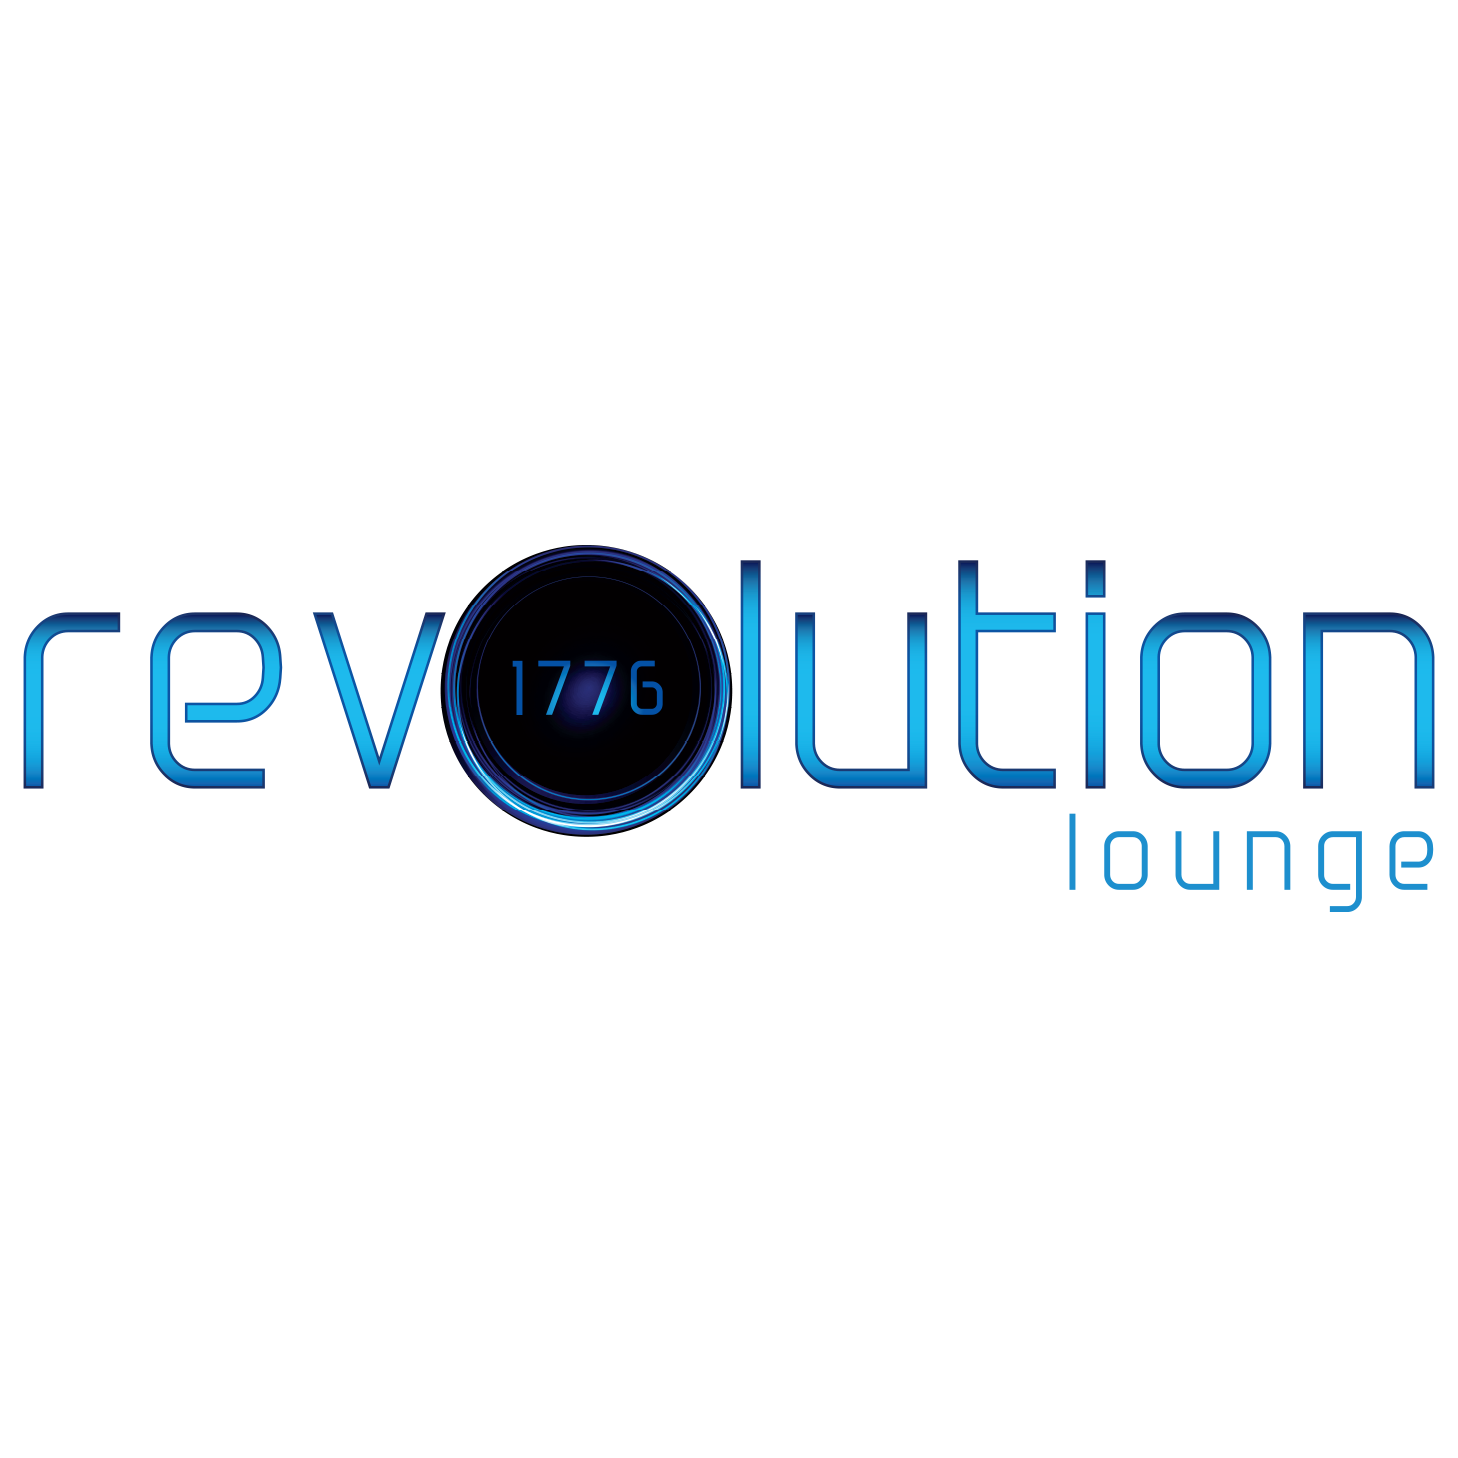 Revolution 1776 Lounge